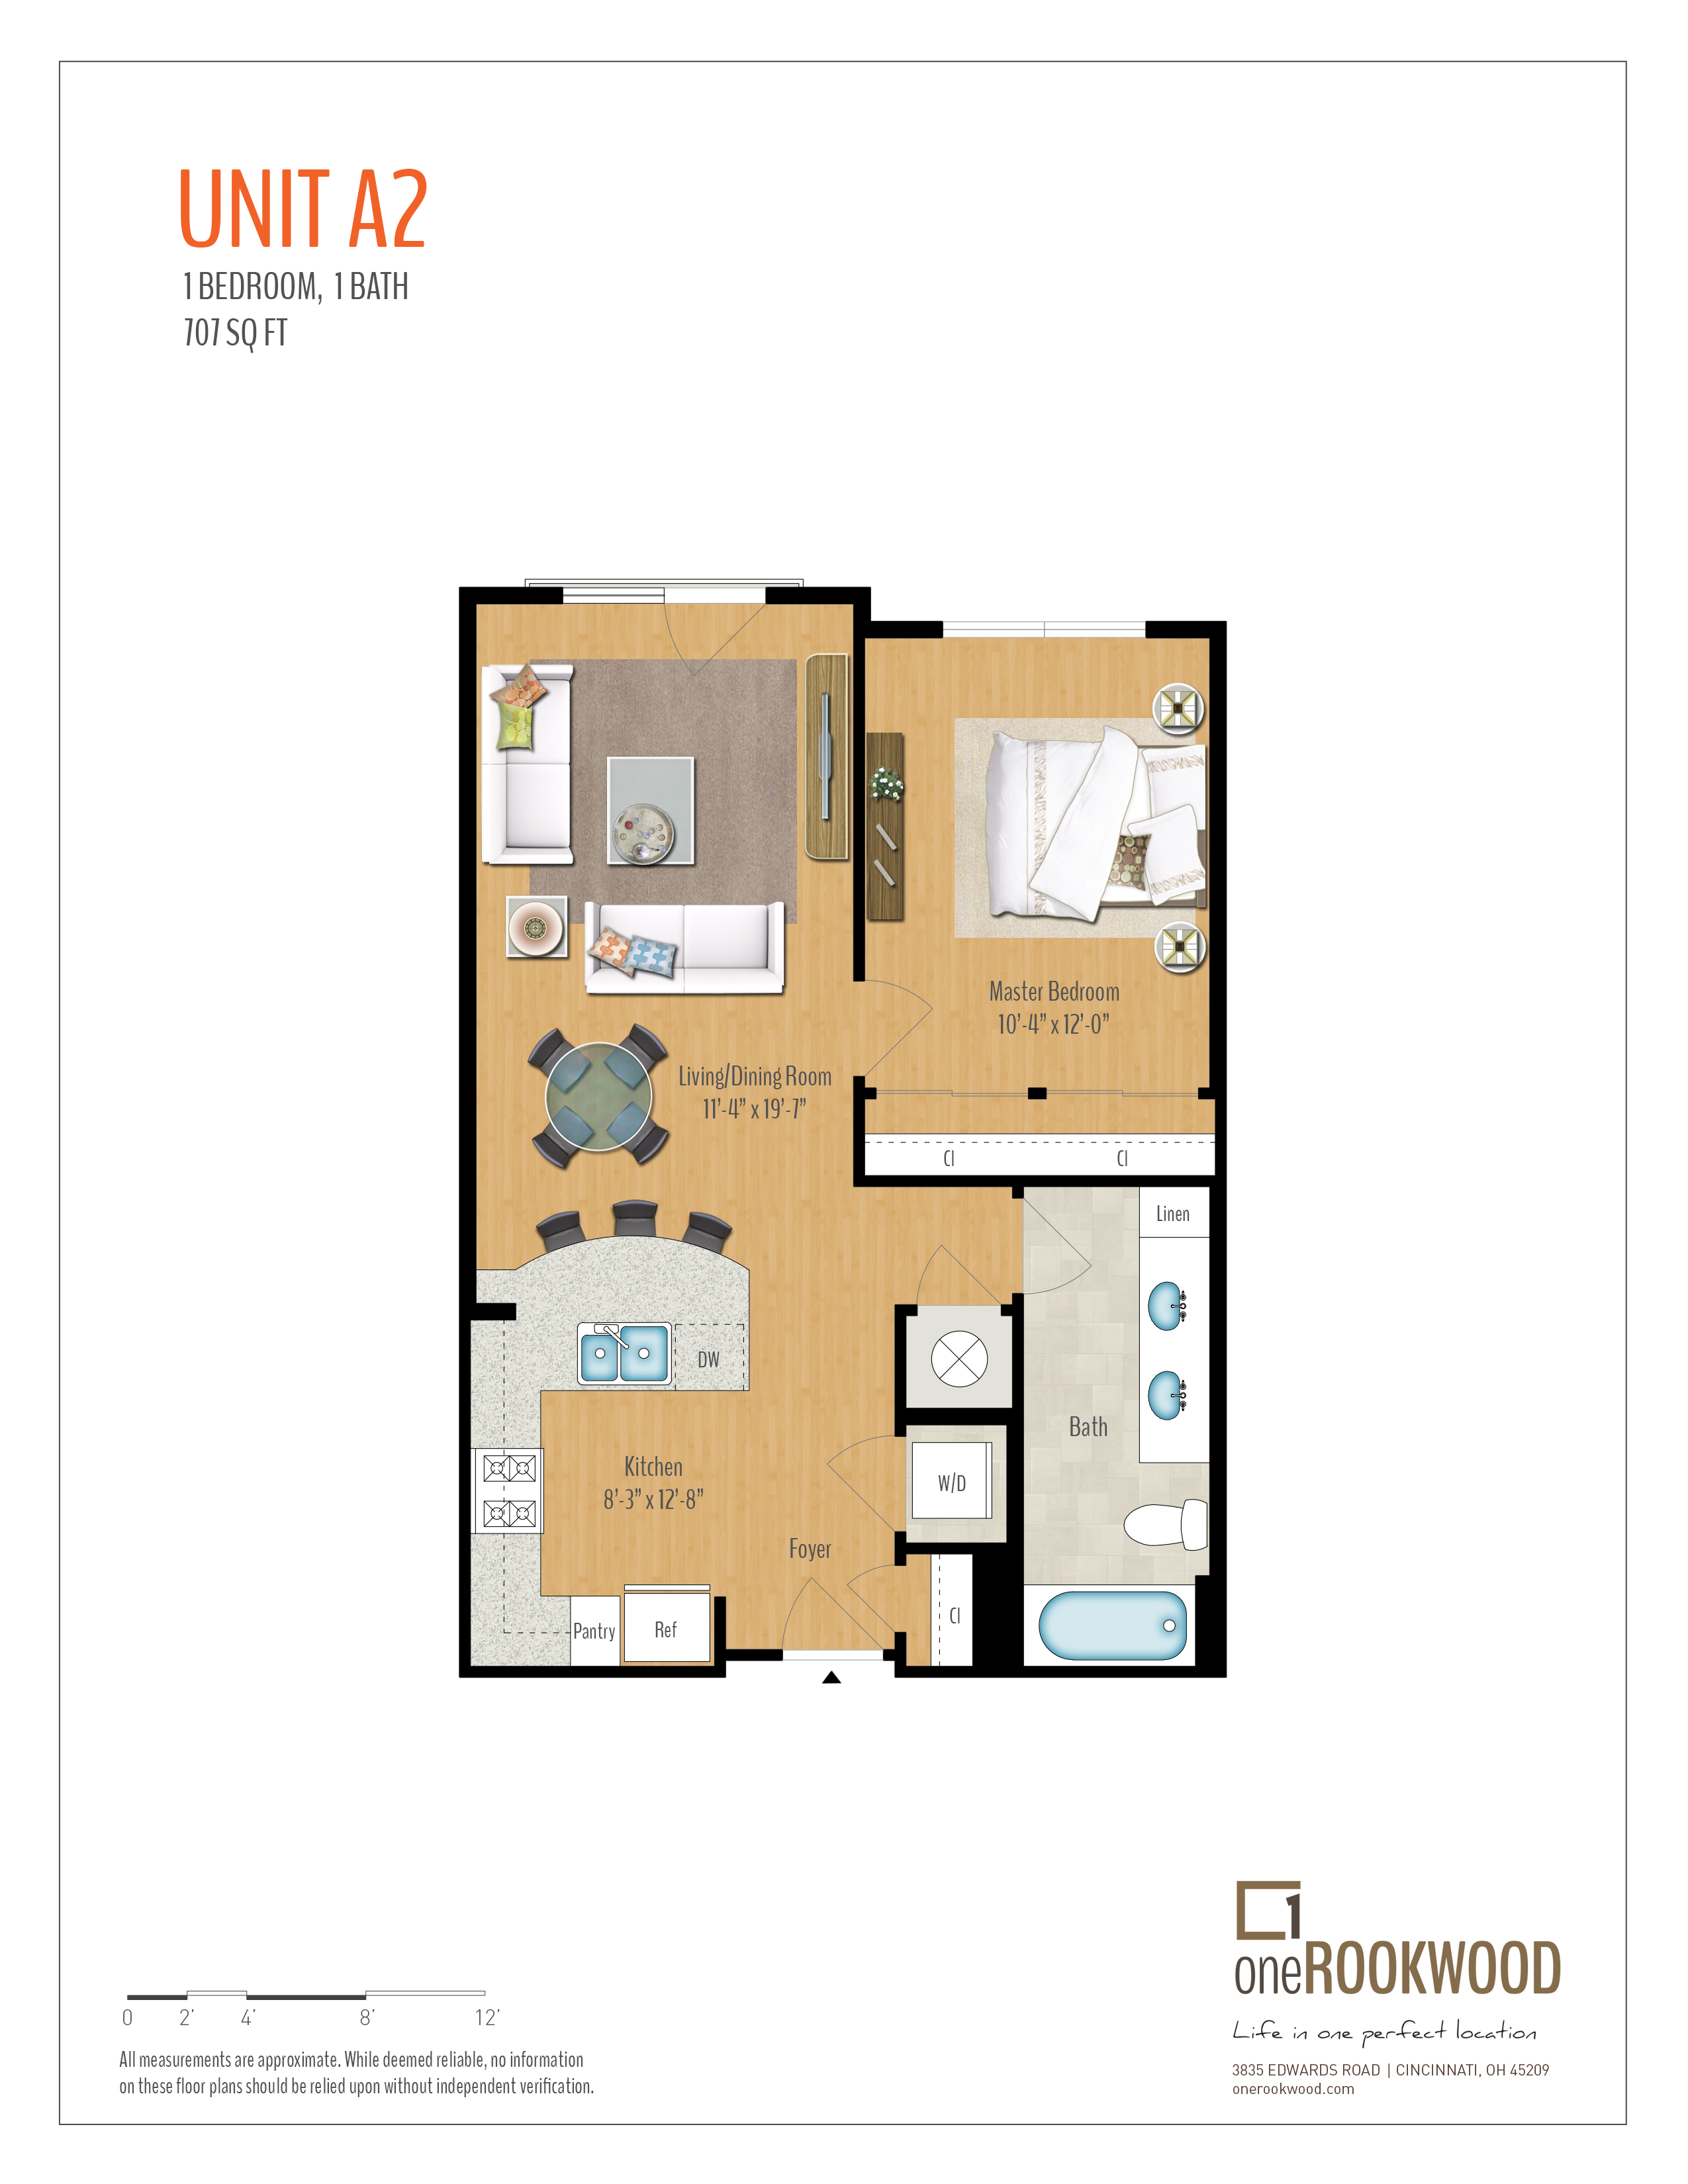 OneRookwood-Unit A2-FloorPlan-Print.jpg